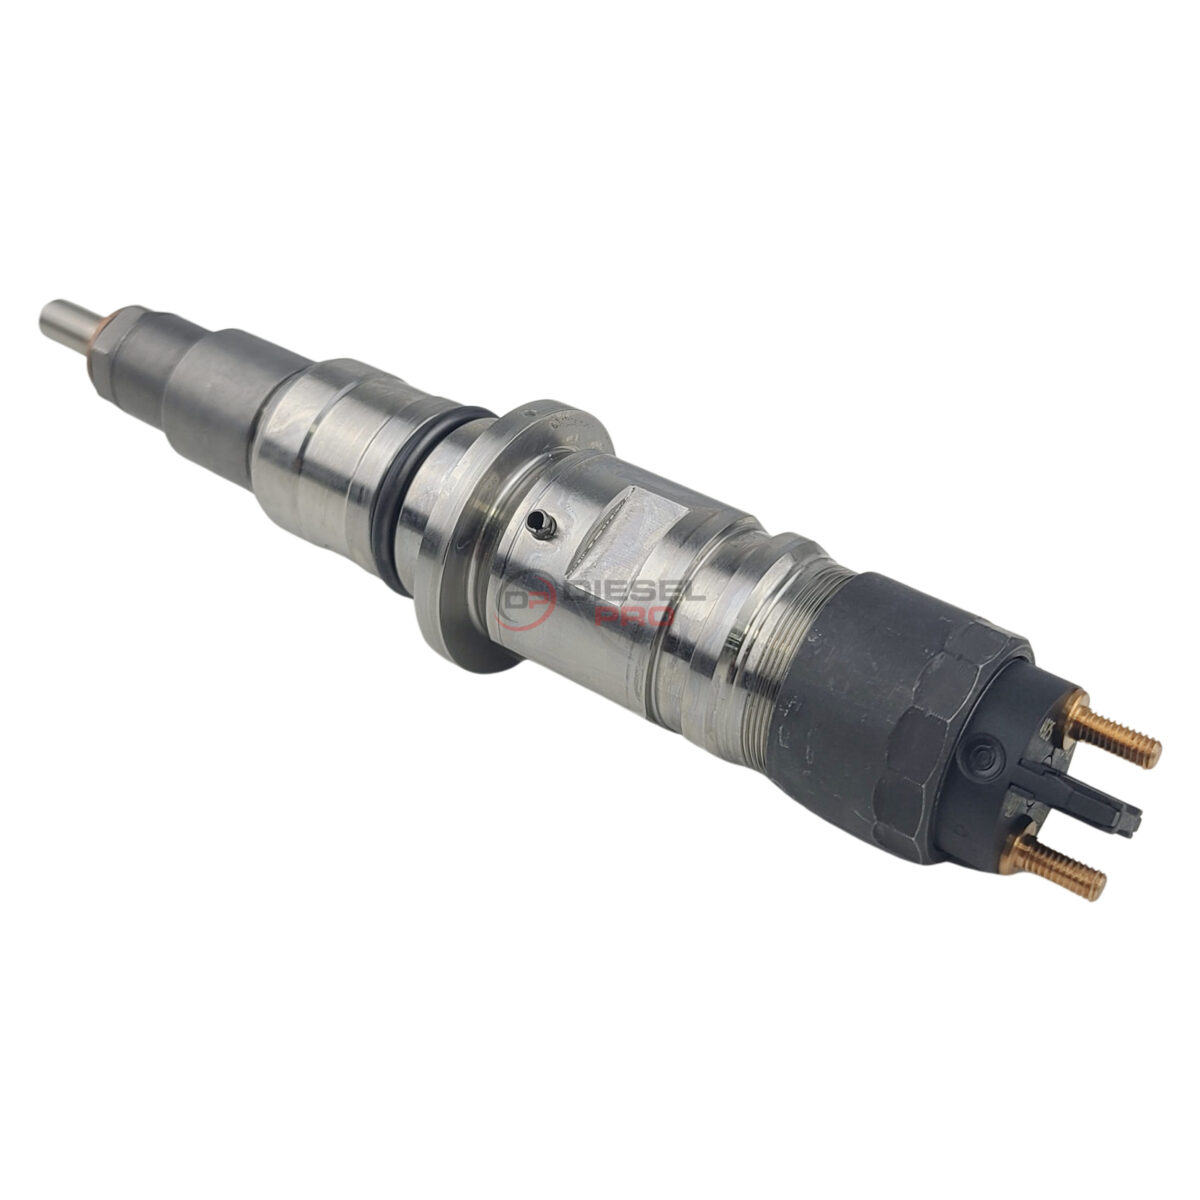 R8210105AA | Mopar Cummins 6.7L Fuel Injector (68210105AA)